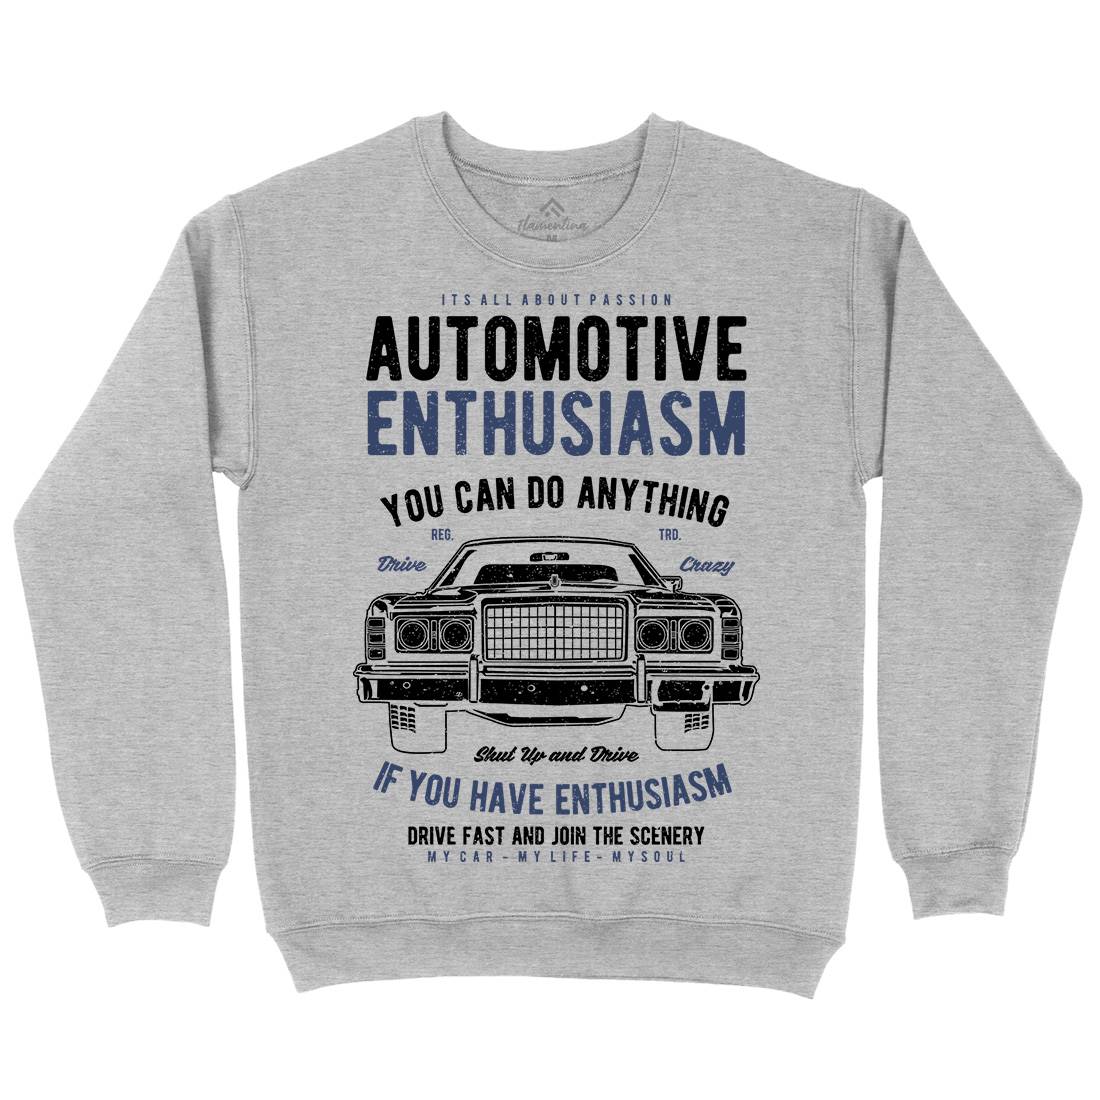 Automotive Enthusiasm Mens Crew Neck Sweatshirt Cars A614